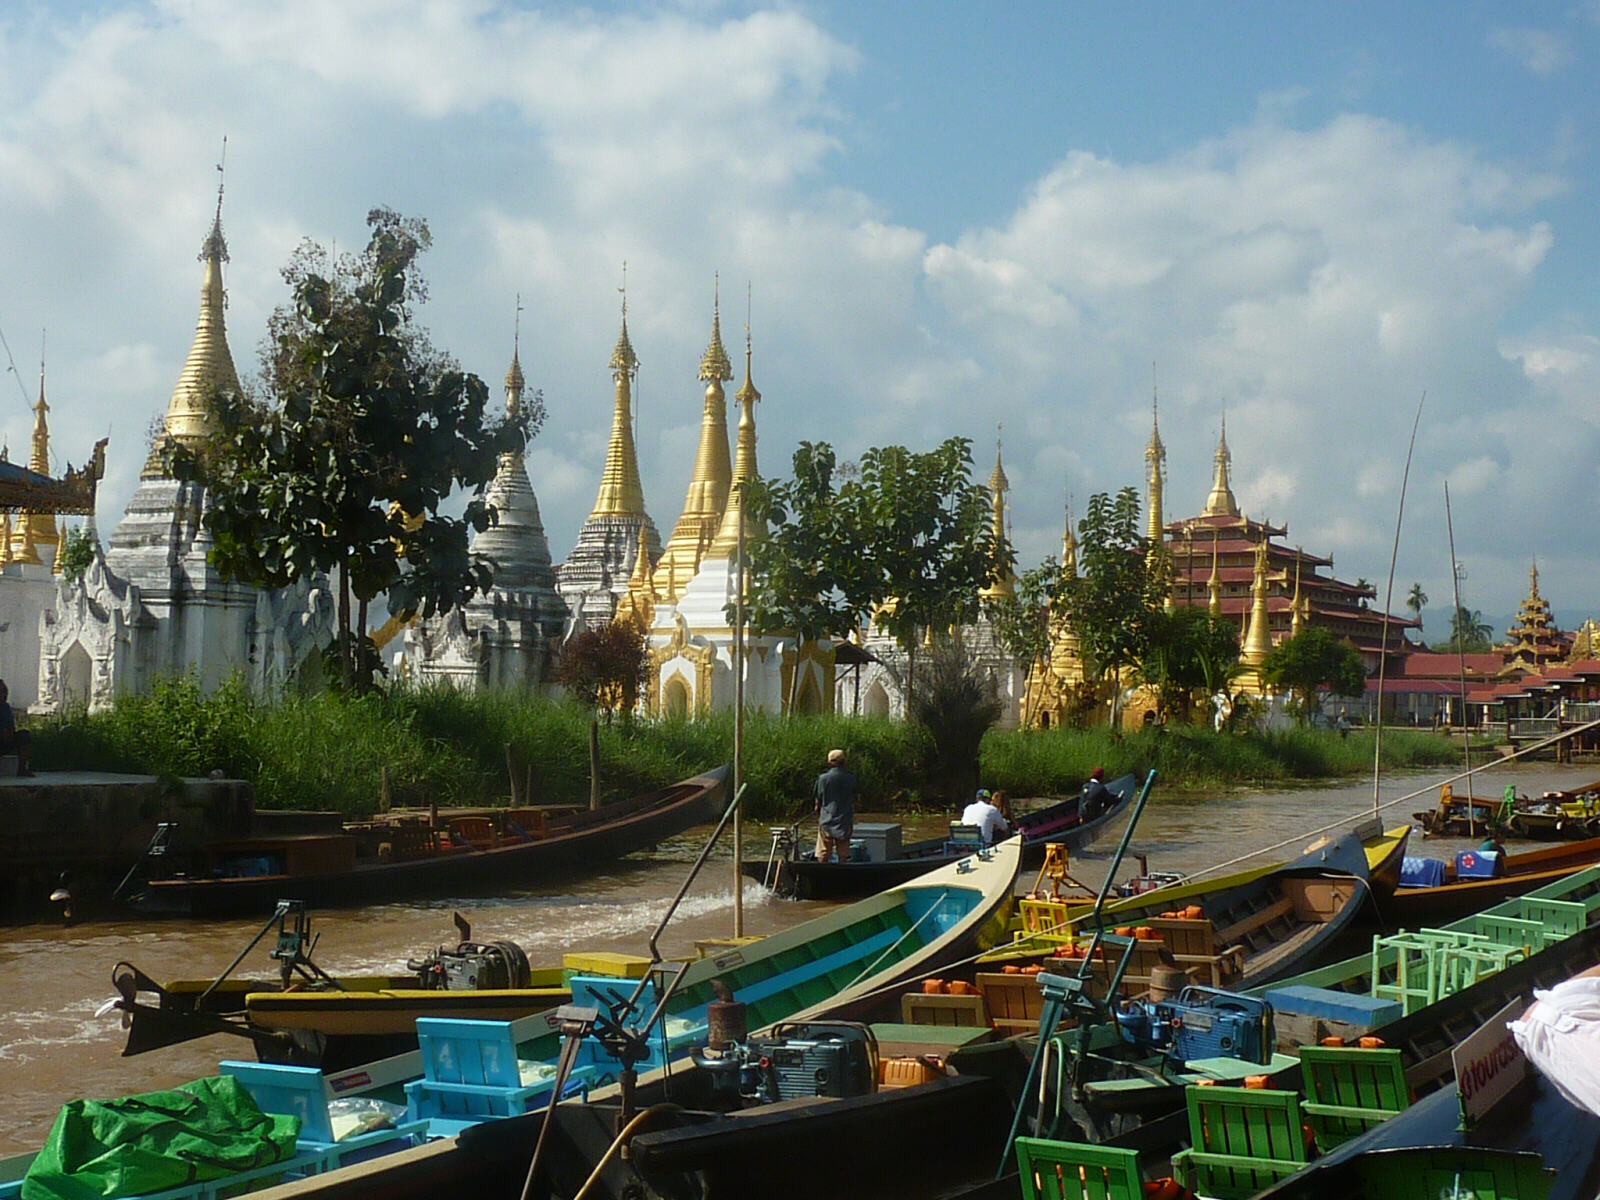 Monastery and floating market in Inle lake, Burma